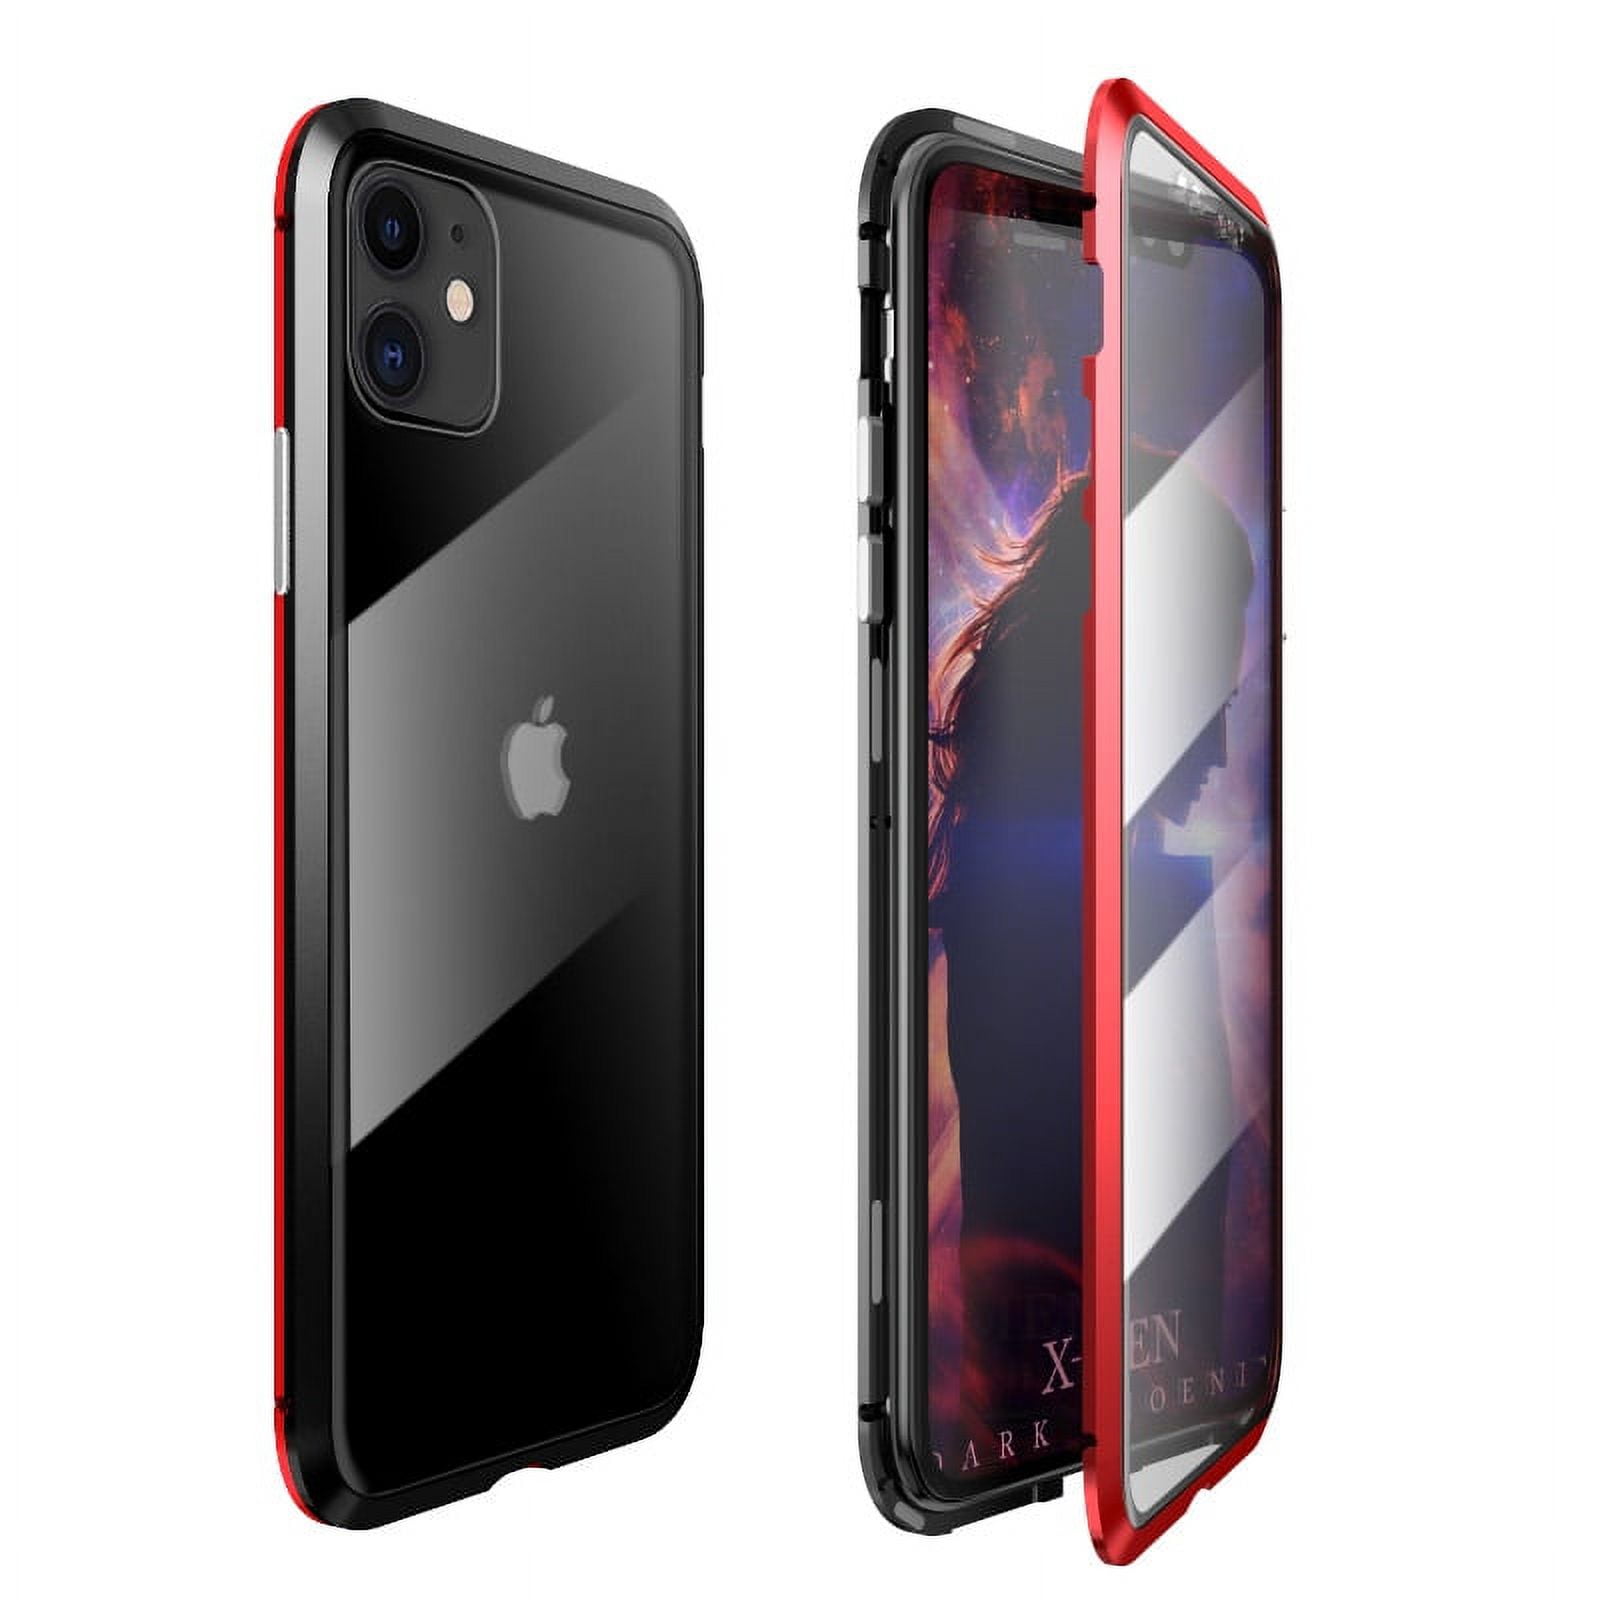 Louisville Cardinals HD iPhone 11 - 15 Series Phone Case